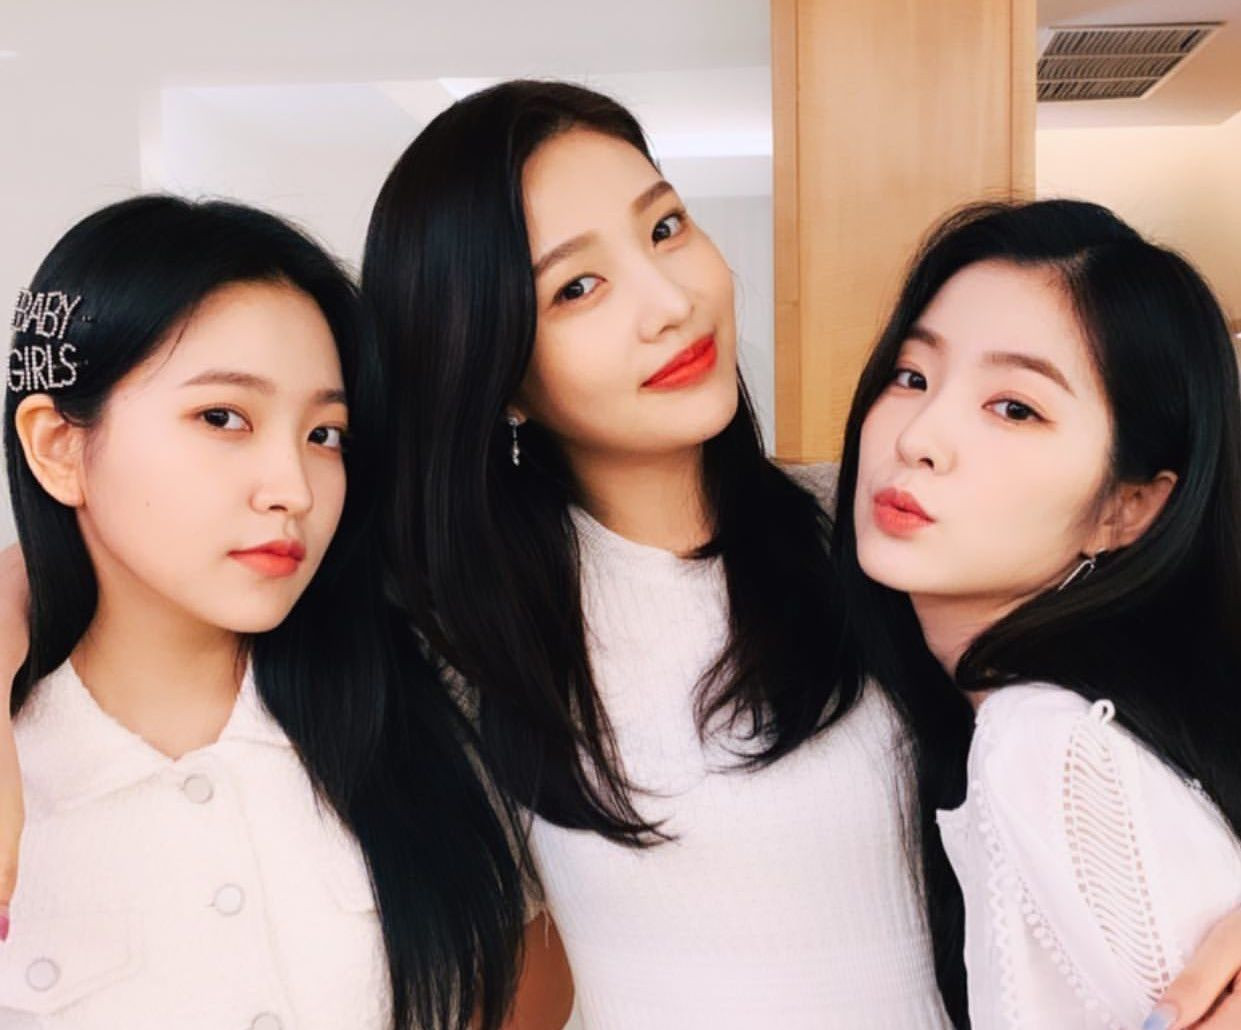 Jelang Comeback, Irene, Joy Dan Yeri Red Velvet Dinyatakan Positif Covid-19